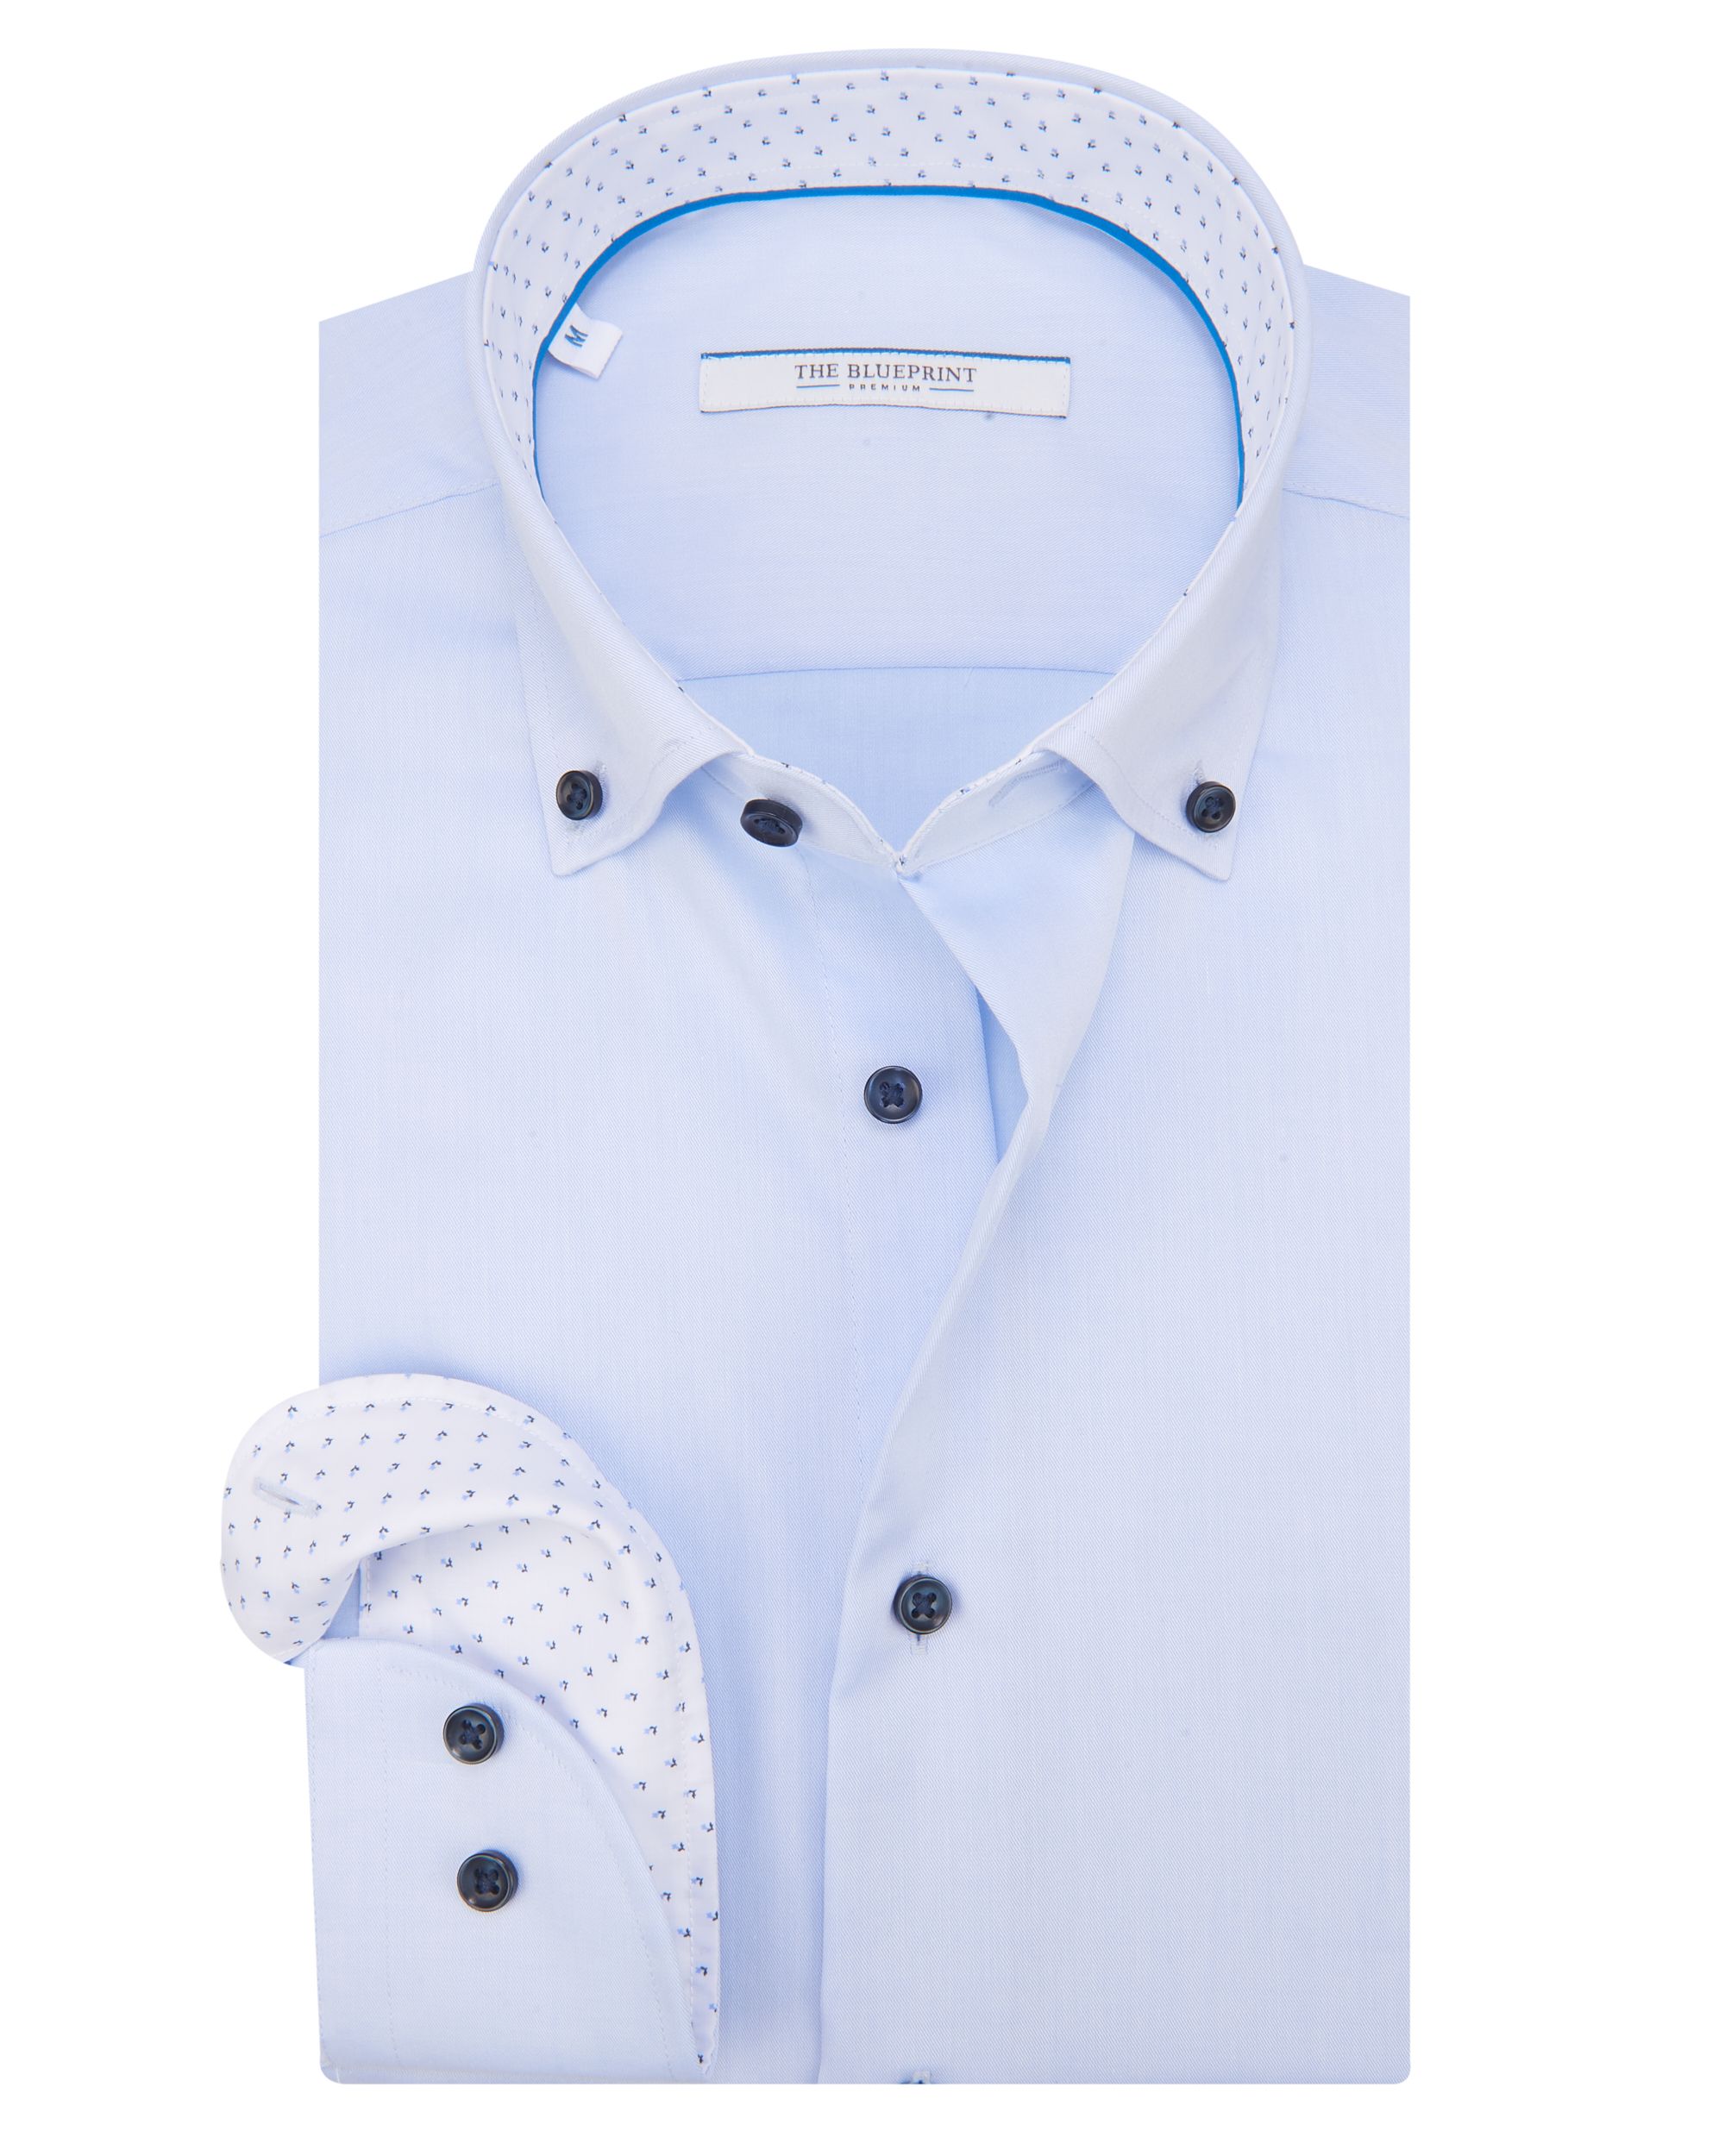 The BLUEPRINT Premium Trendy overhemd LM Lichtblauw uni 078652-001-L